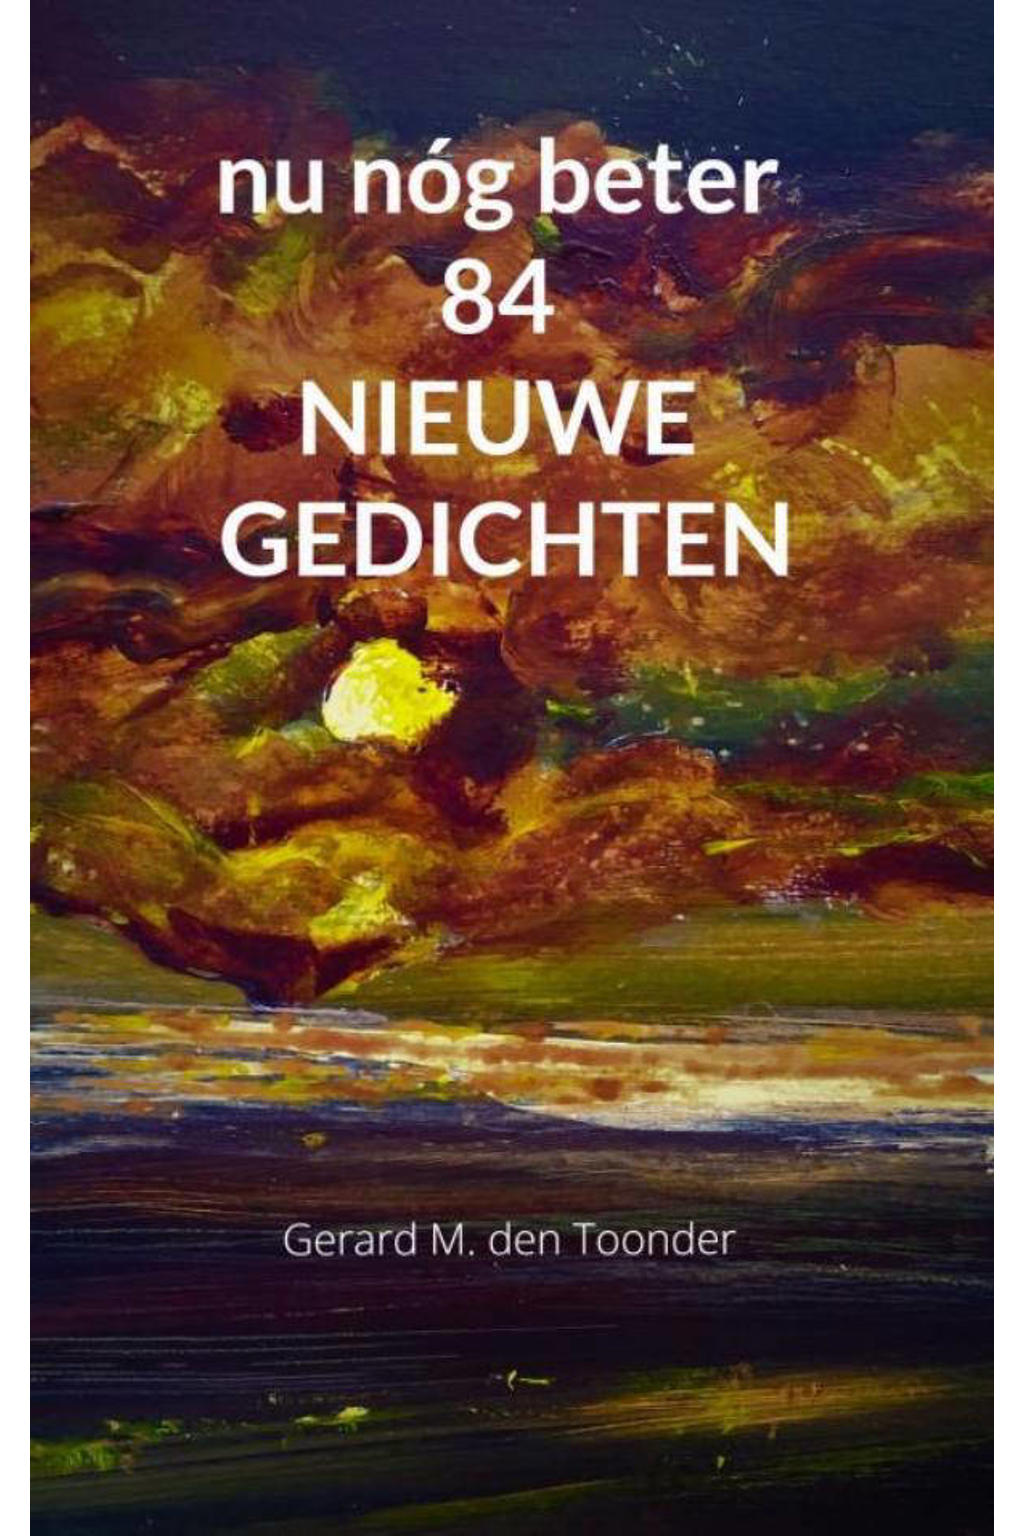 nu nóg beter 84 NIEUWE GEDICHTEN - Gerard M. Den Toonder